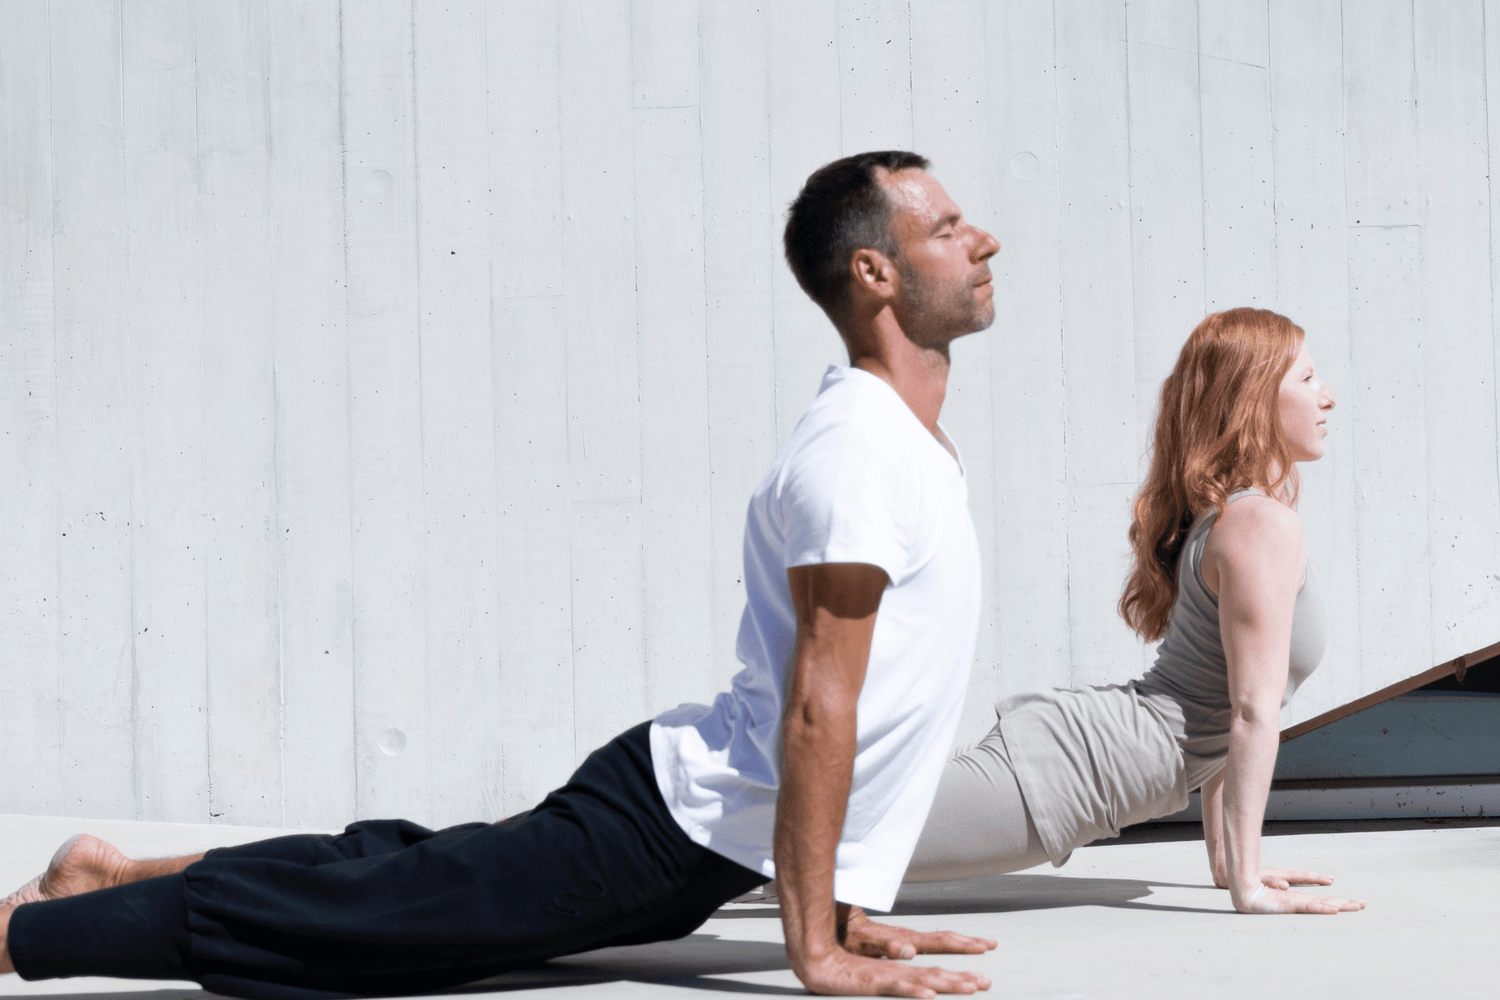 Breath of Fire eco yoga fashion – Breath of Fire Eco & Yoga Fashion